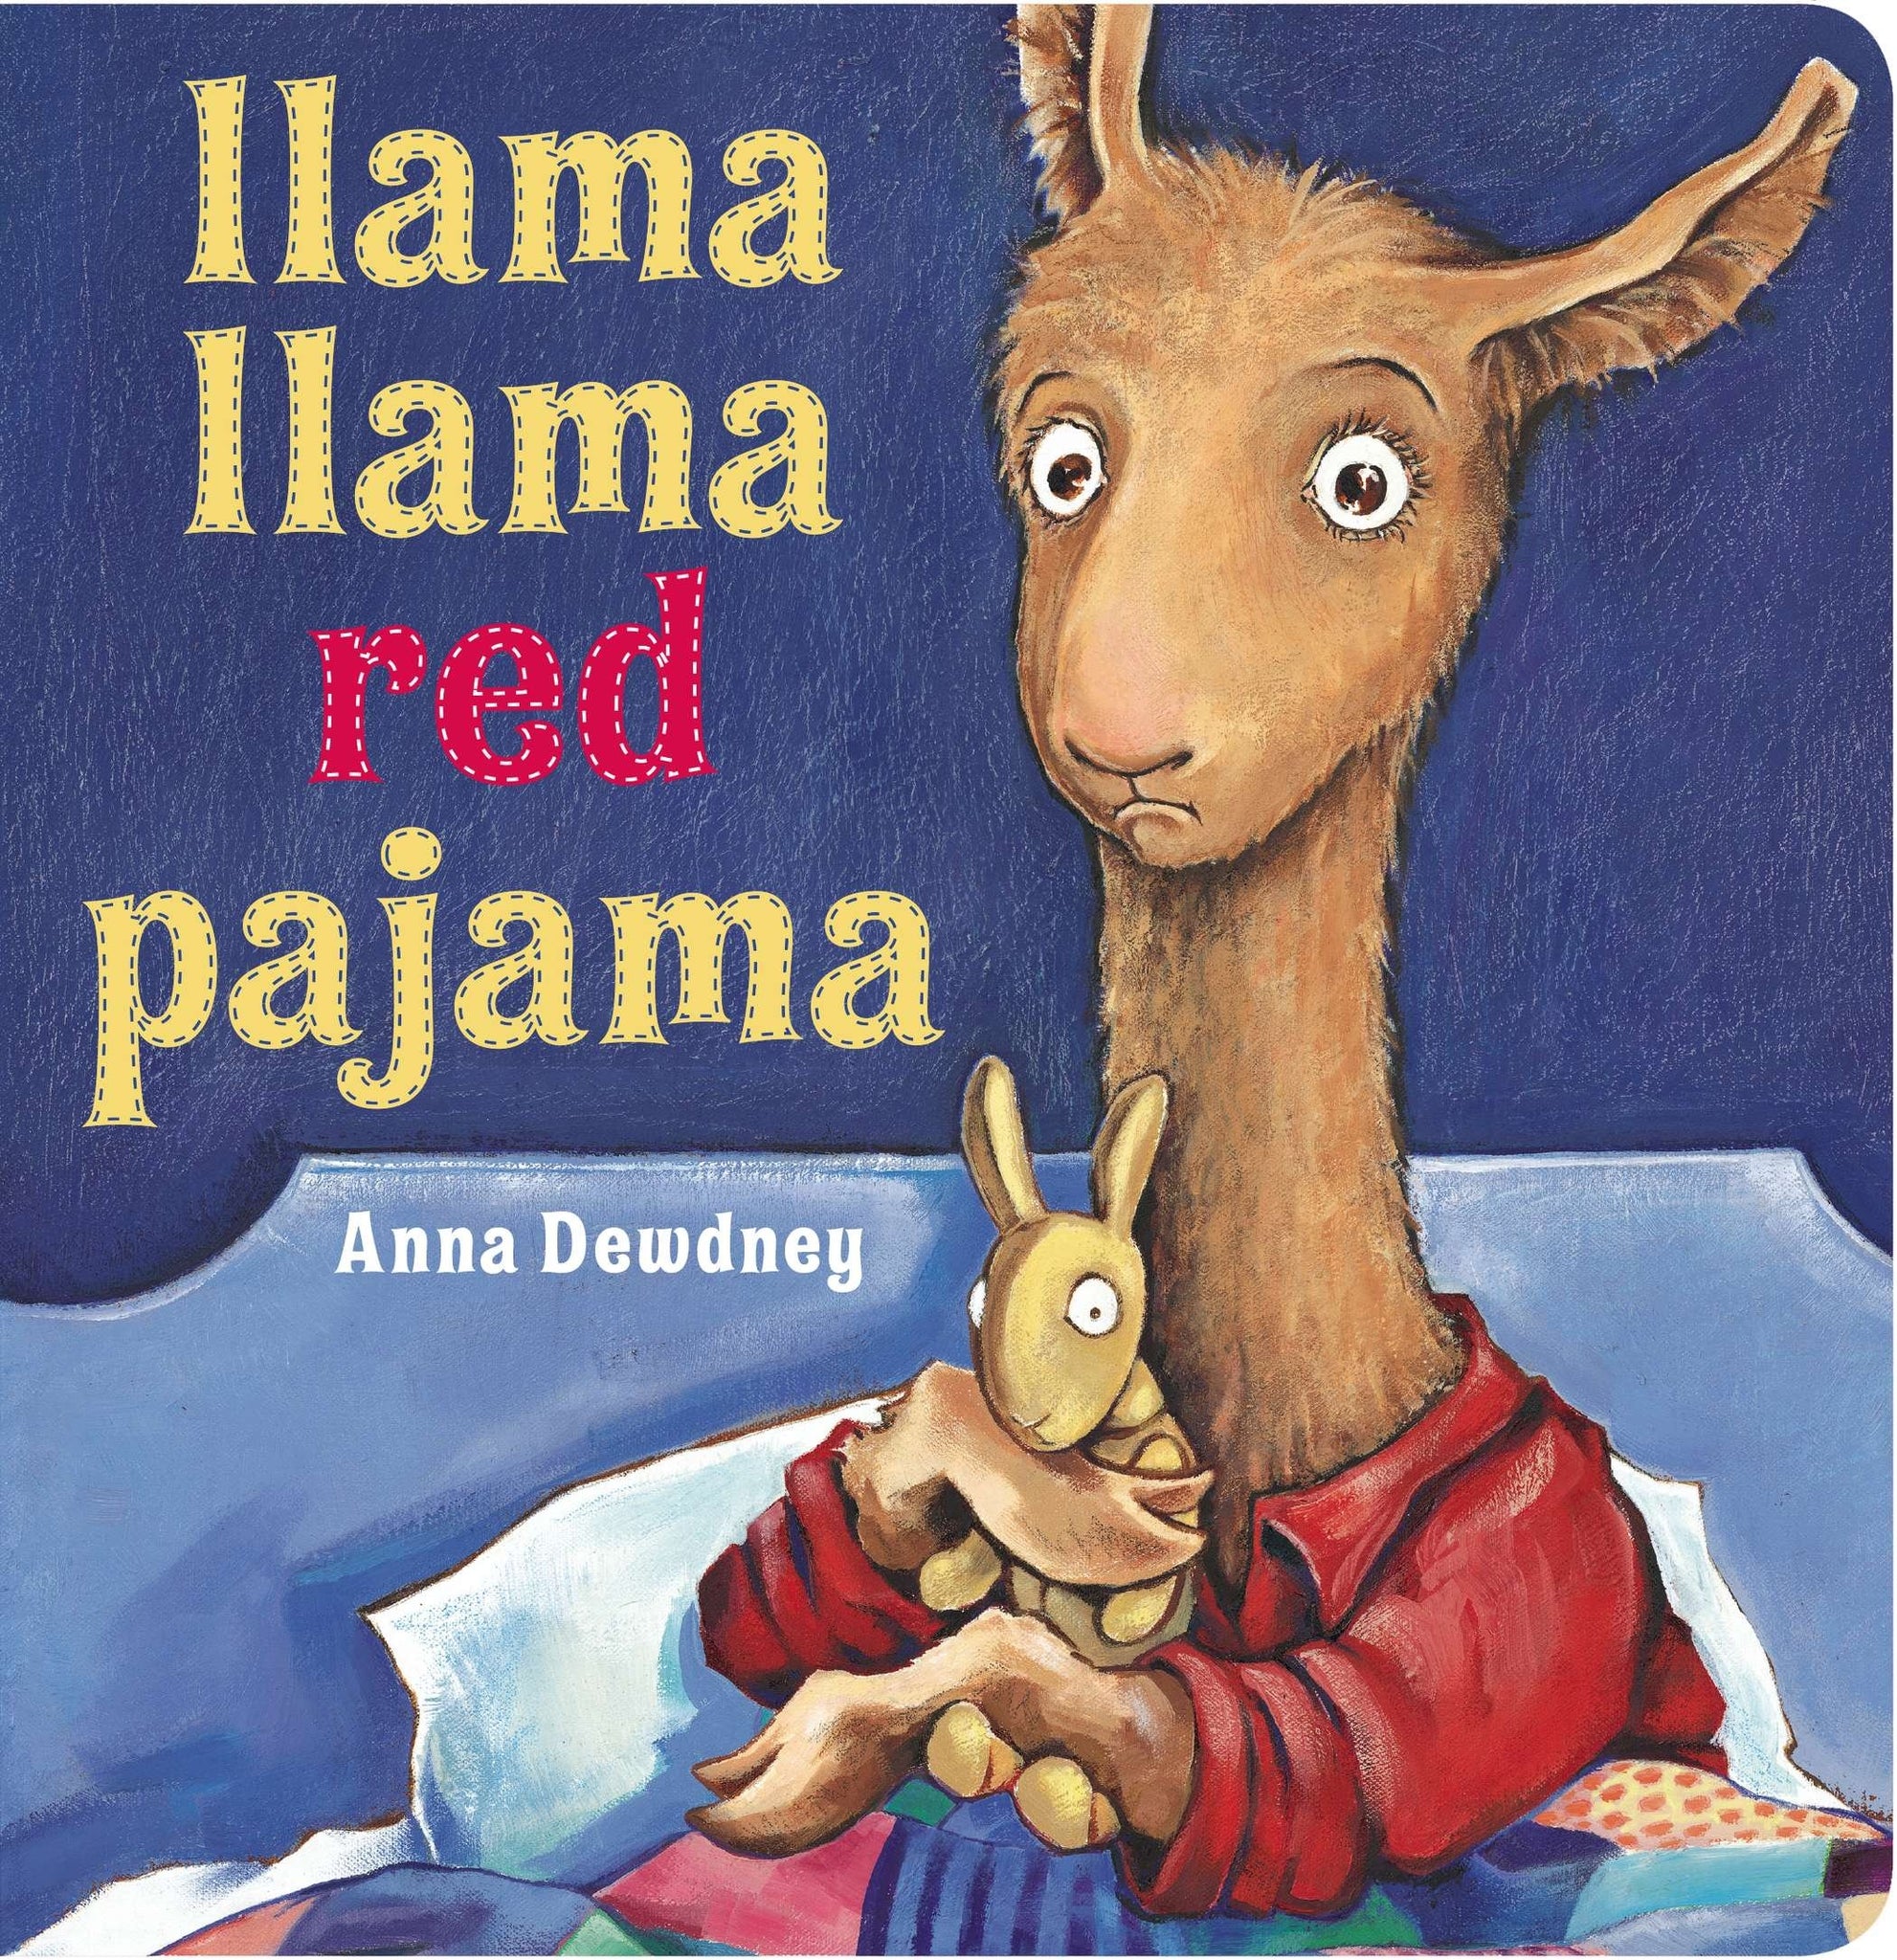 Llama Llama Red Pajama (Hardcover)